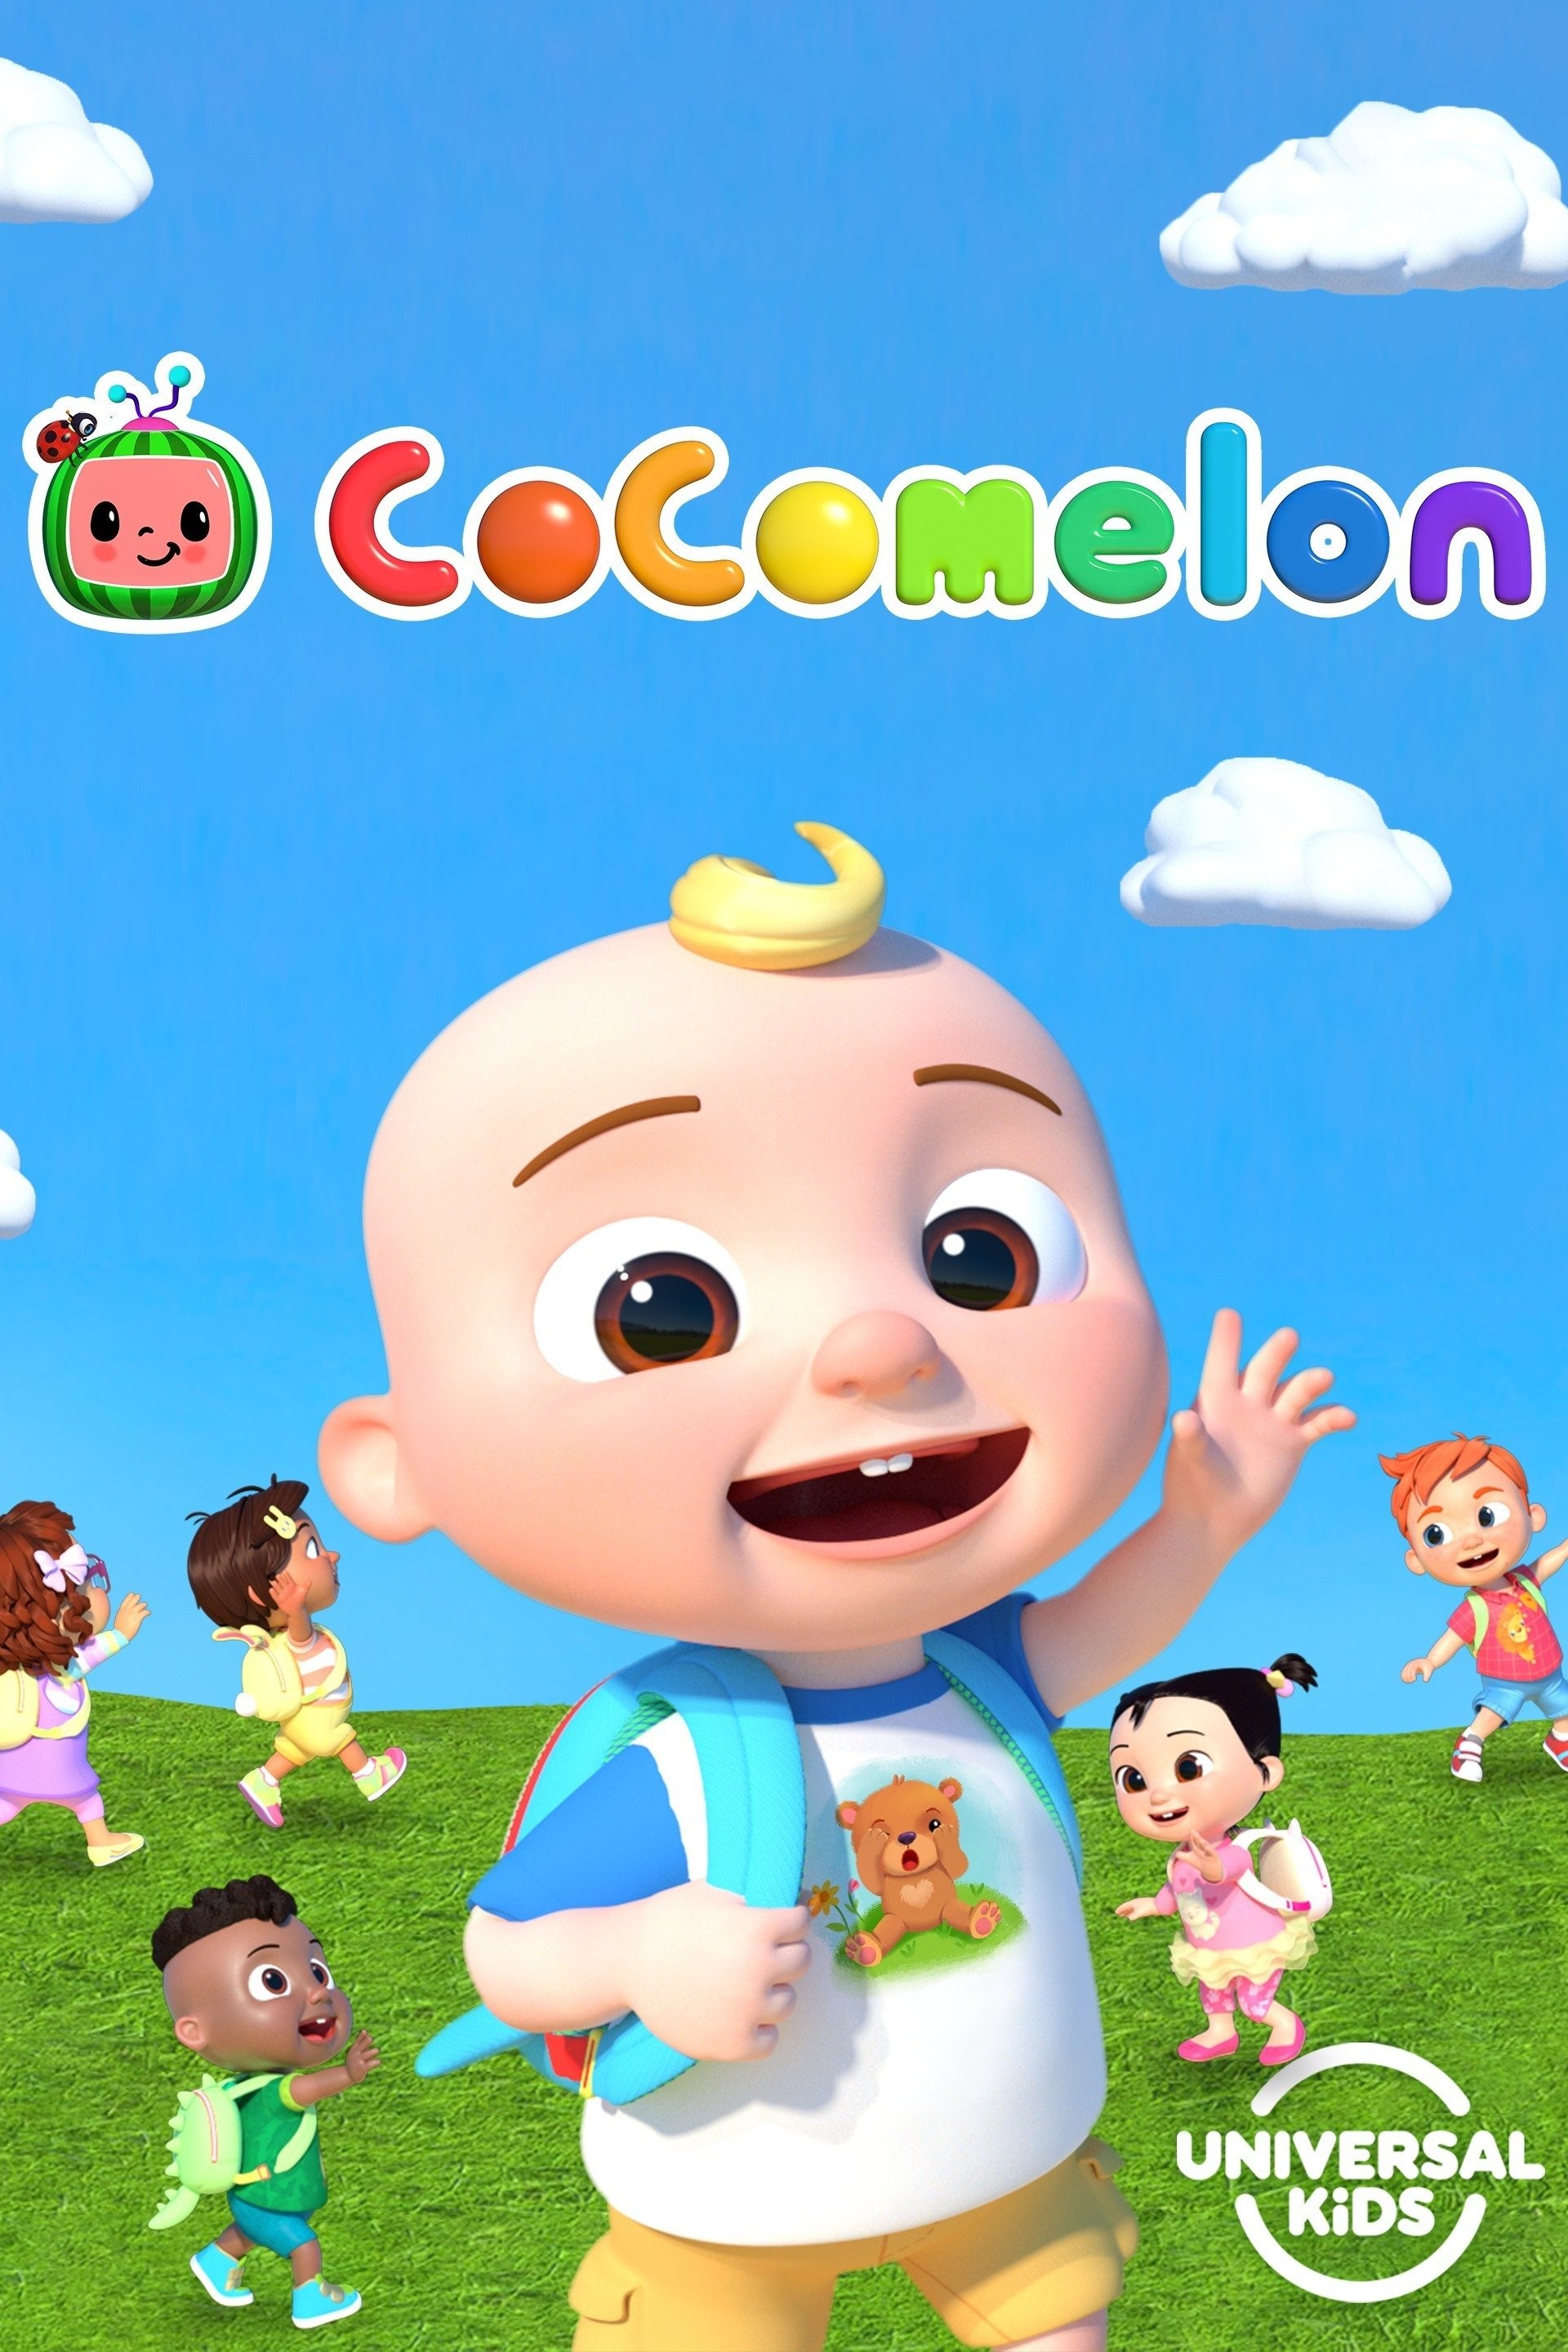 Brand New CoComelon Show! Animal Time - Nursery Rhymes & Kids